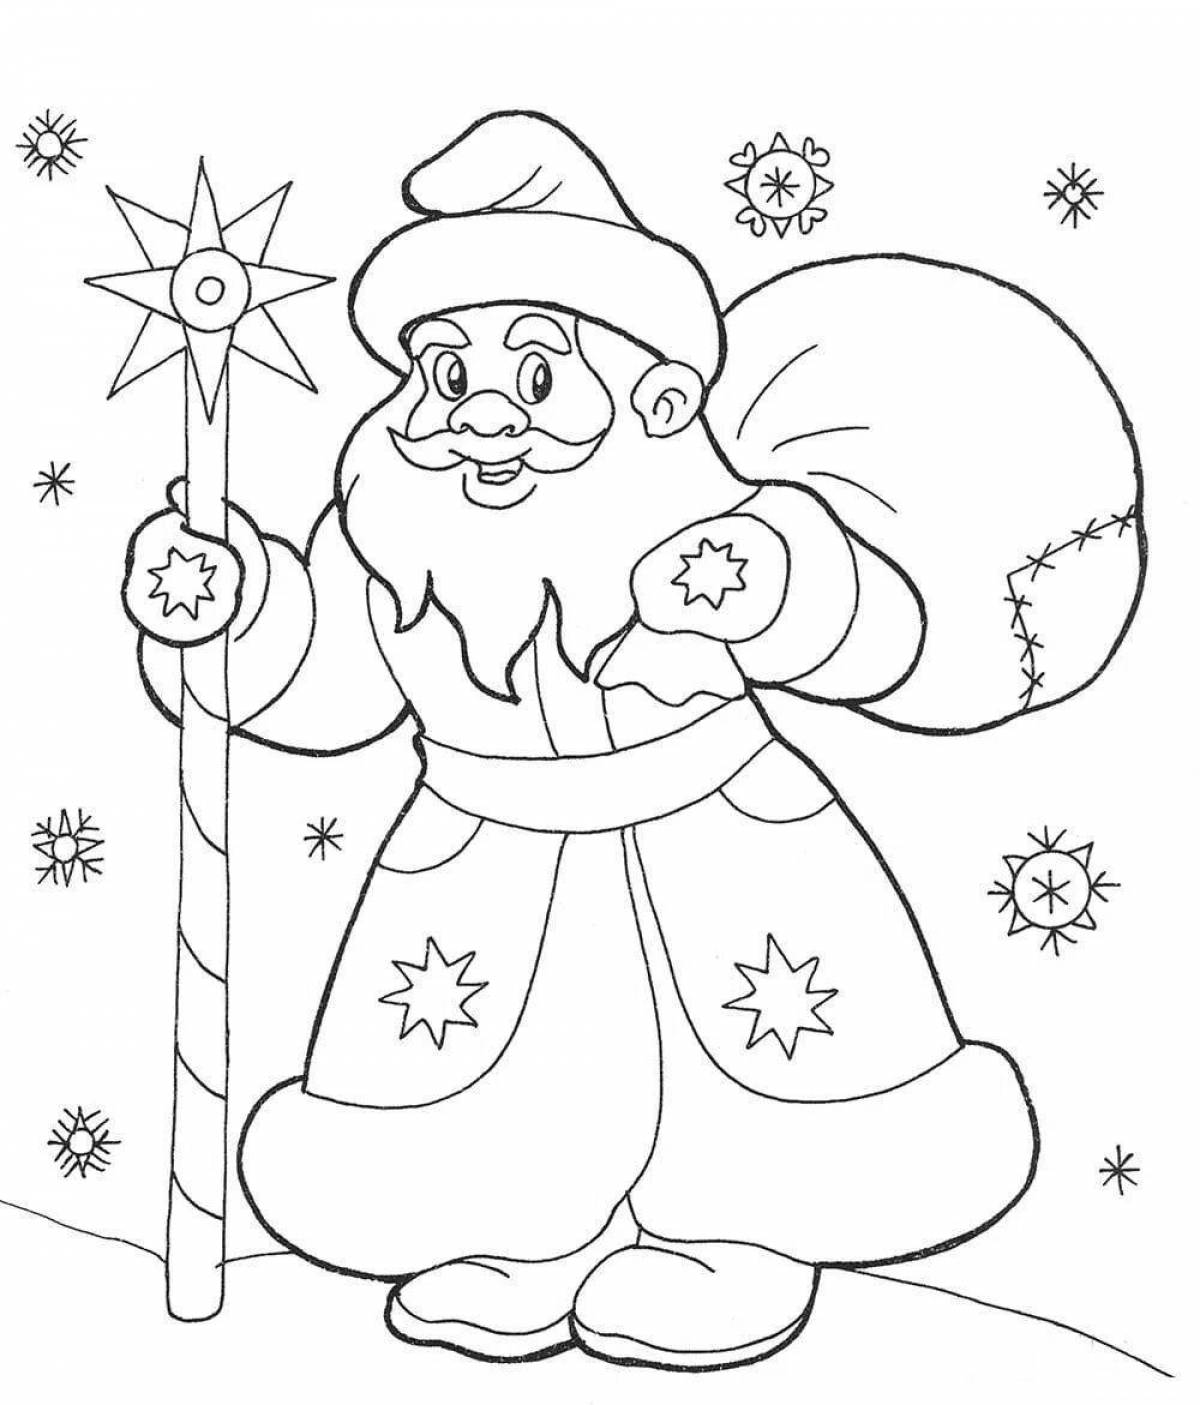 Santa Claus coloring book #1